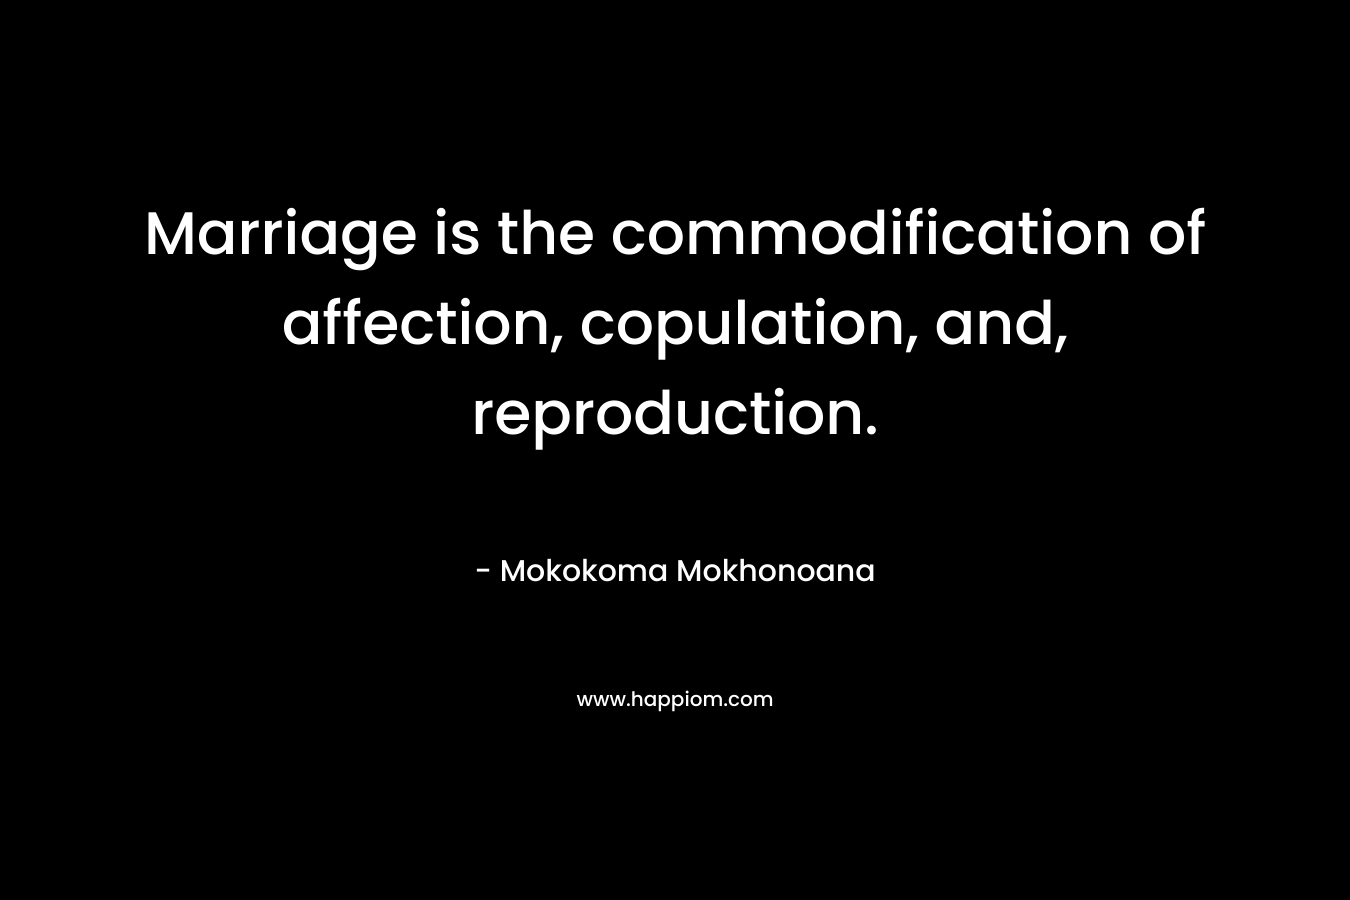 Marriage is the commodification of affection, copulation, and, reproduction. – Mokokoma Mokhonoana